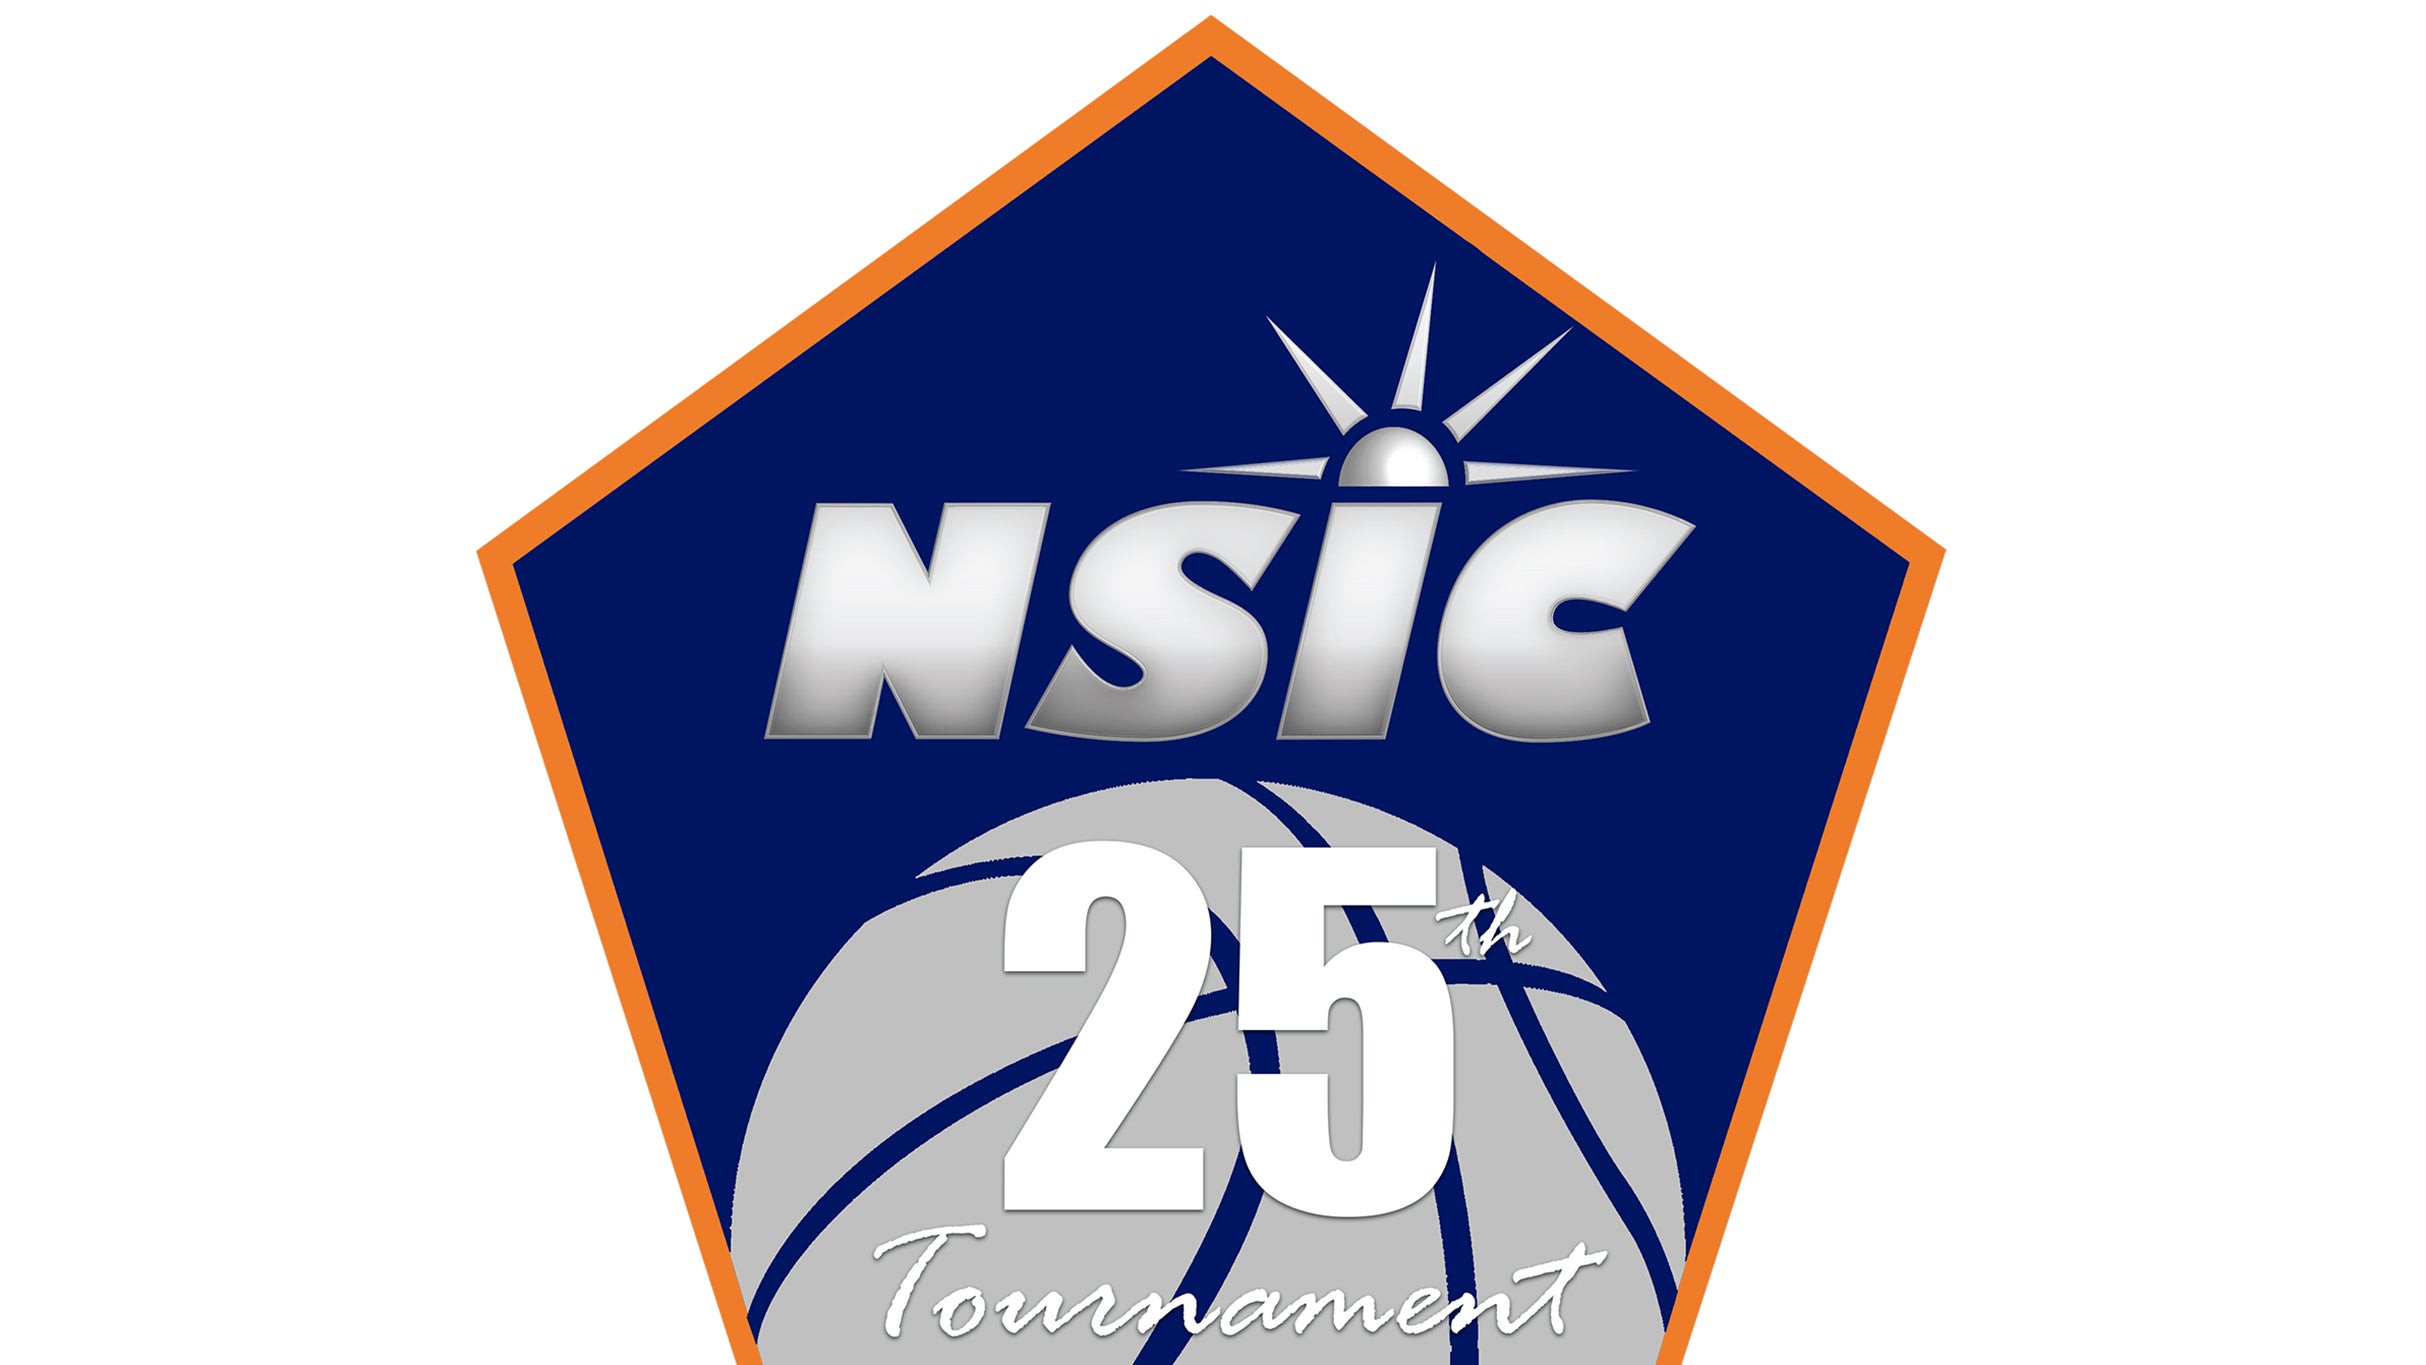 NSIC Tournament - Session 4-Womens at Sanford Pentagon - Sioux Falls, SD 57107